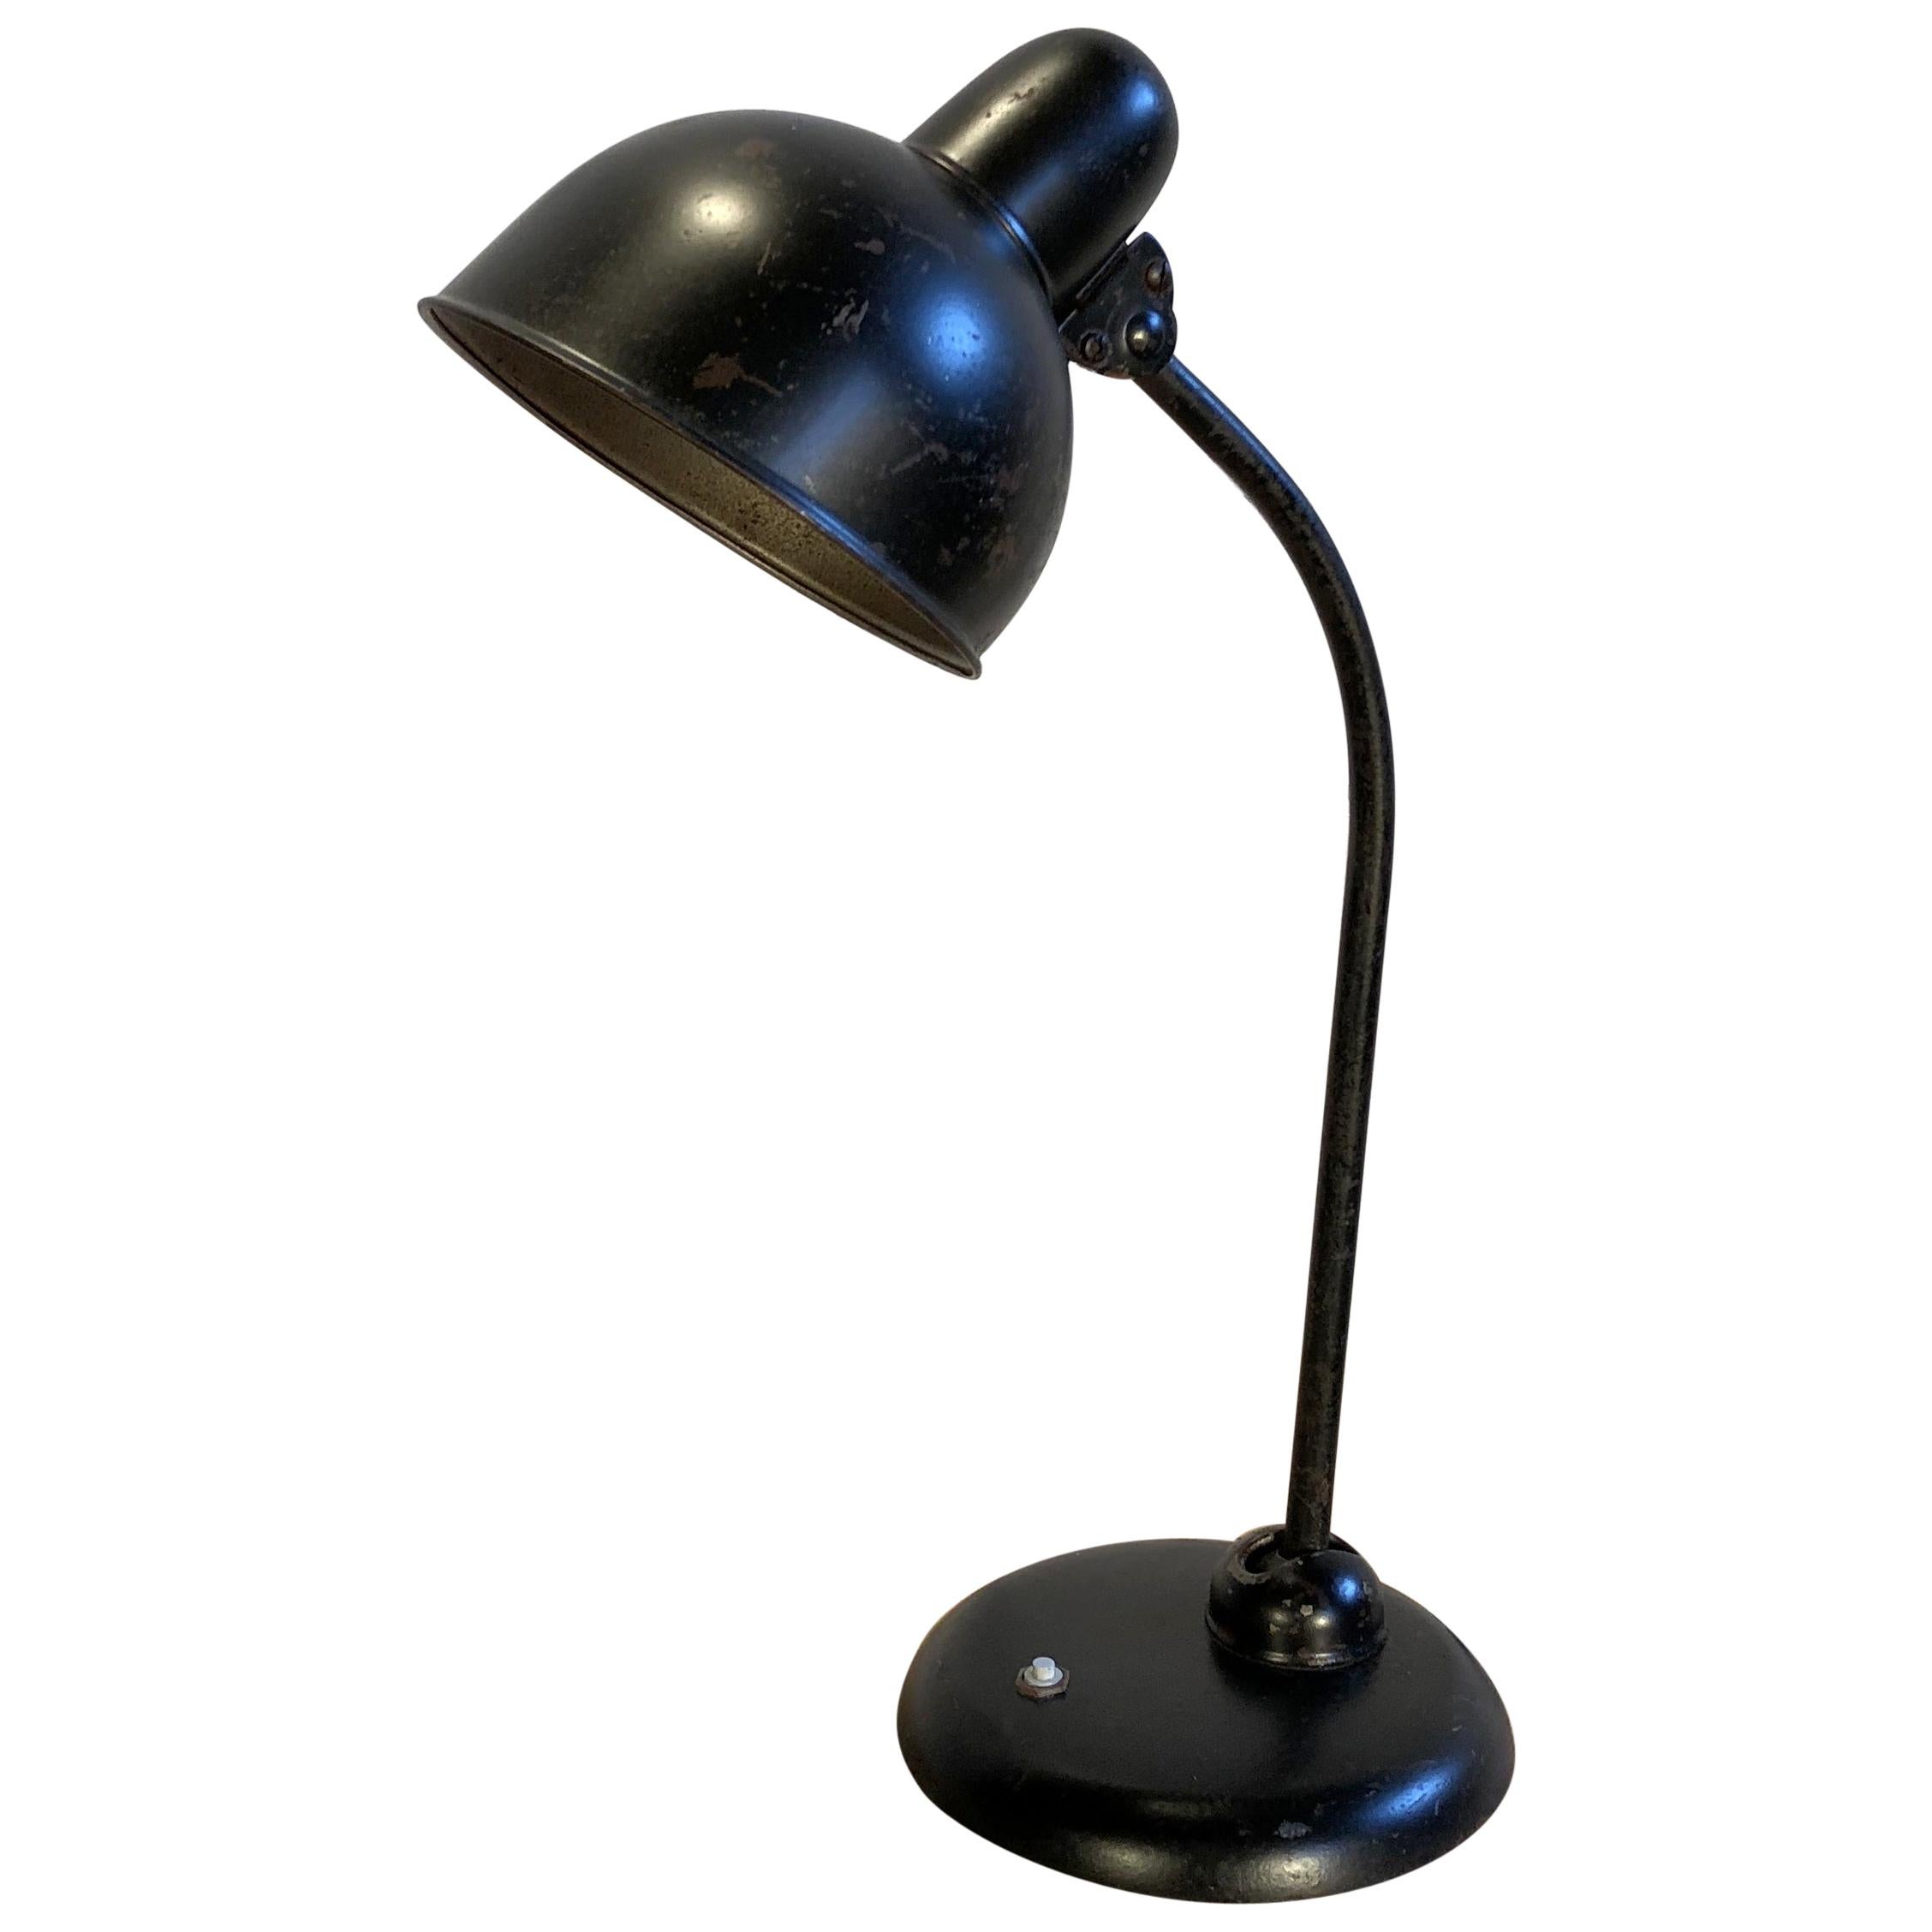 Black Industrial Bauhaus Table Lamp, 1930s